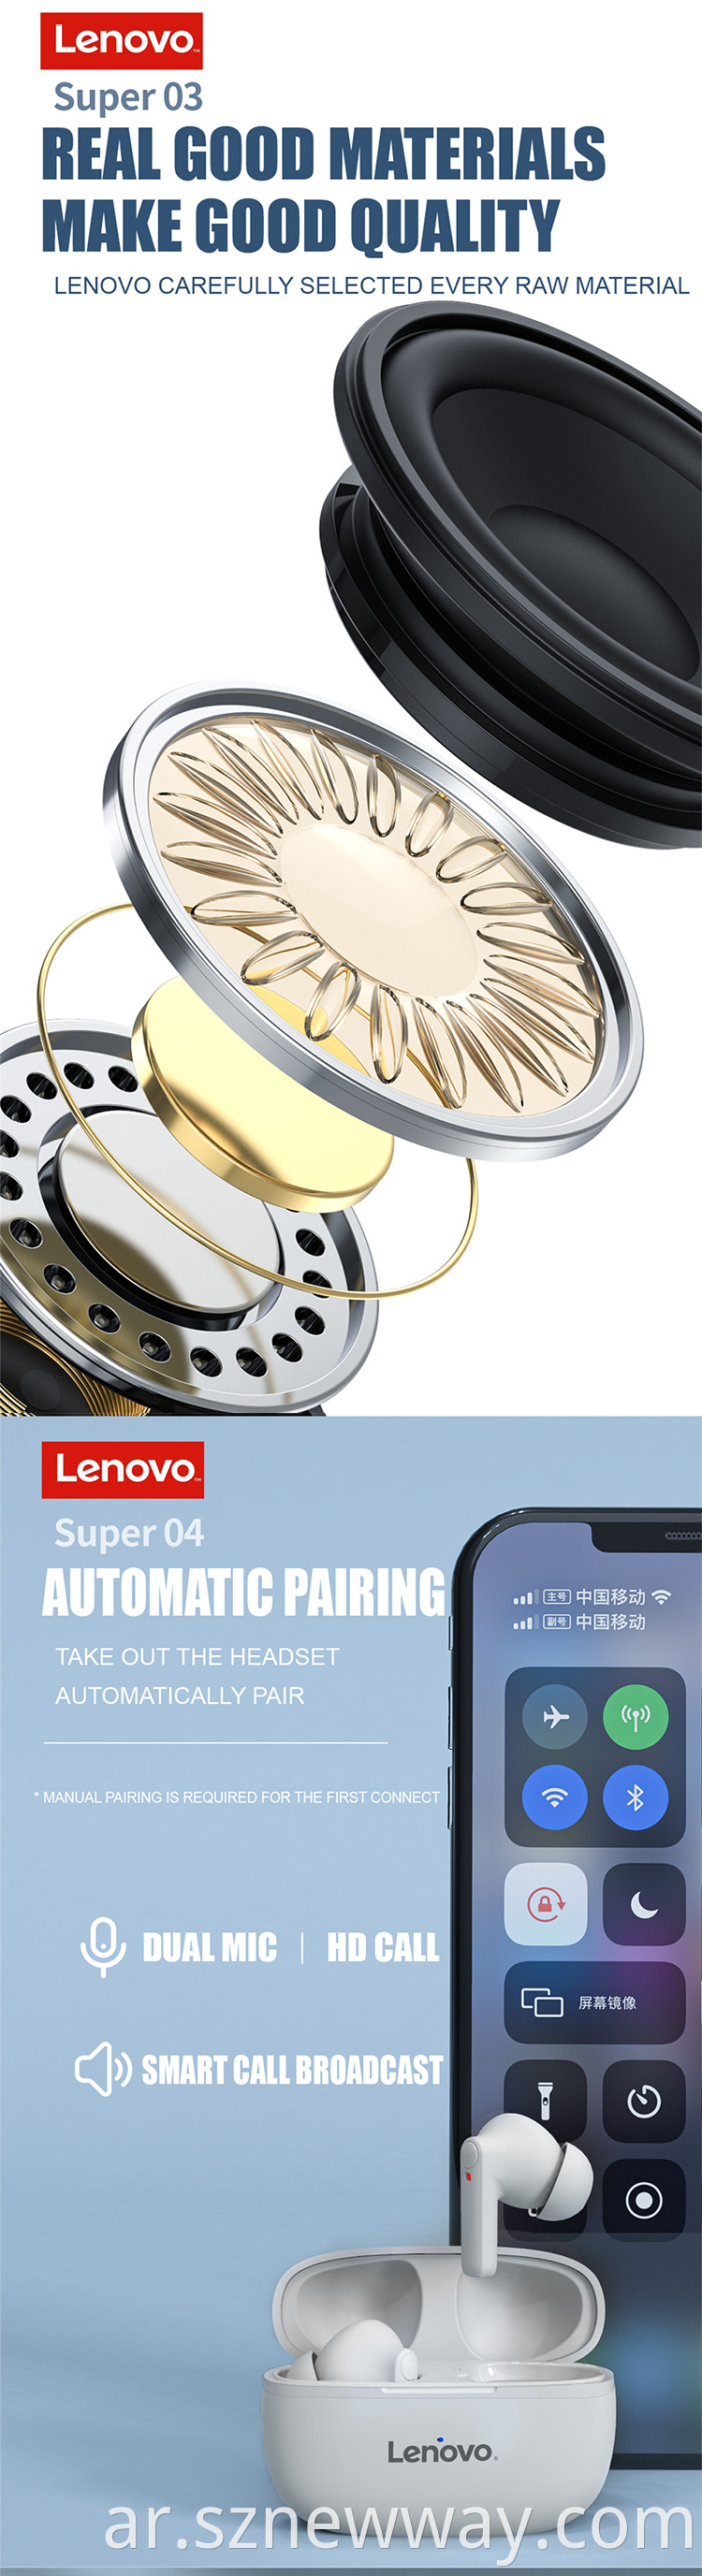 Lenovo Ht05 Wireless Earphones